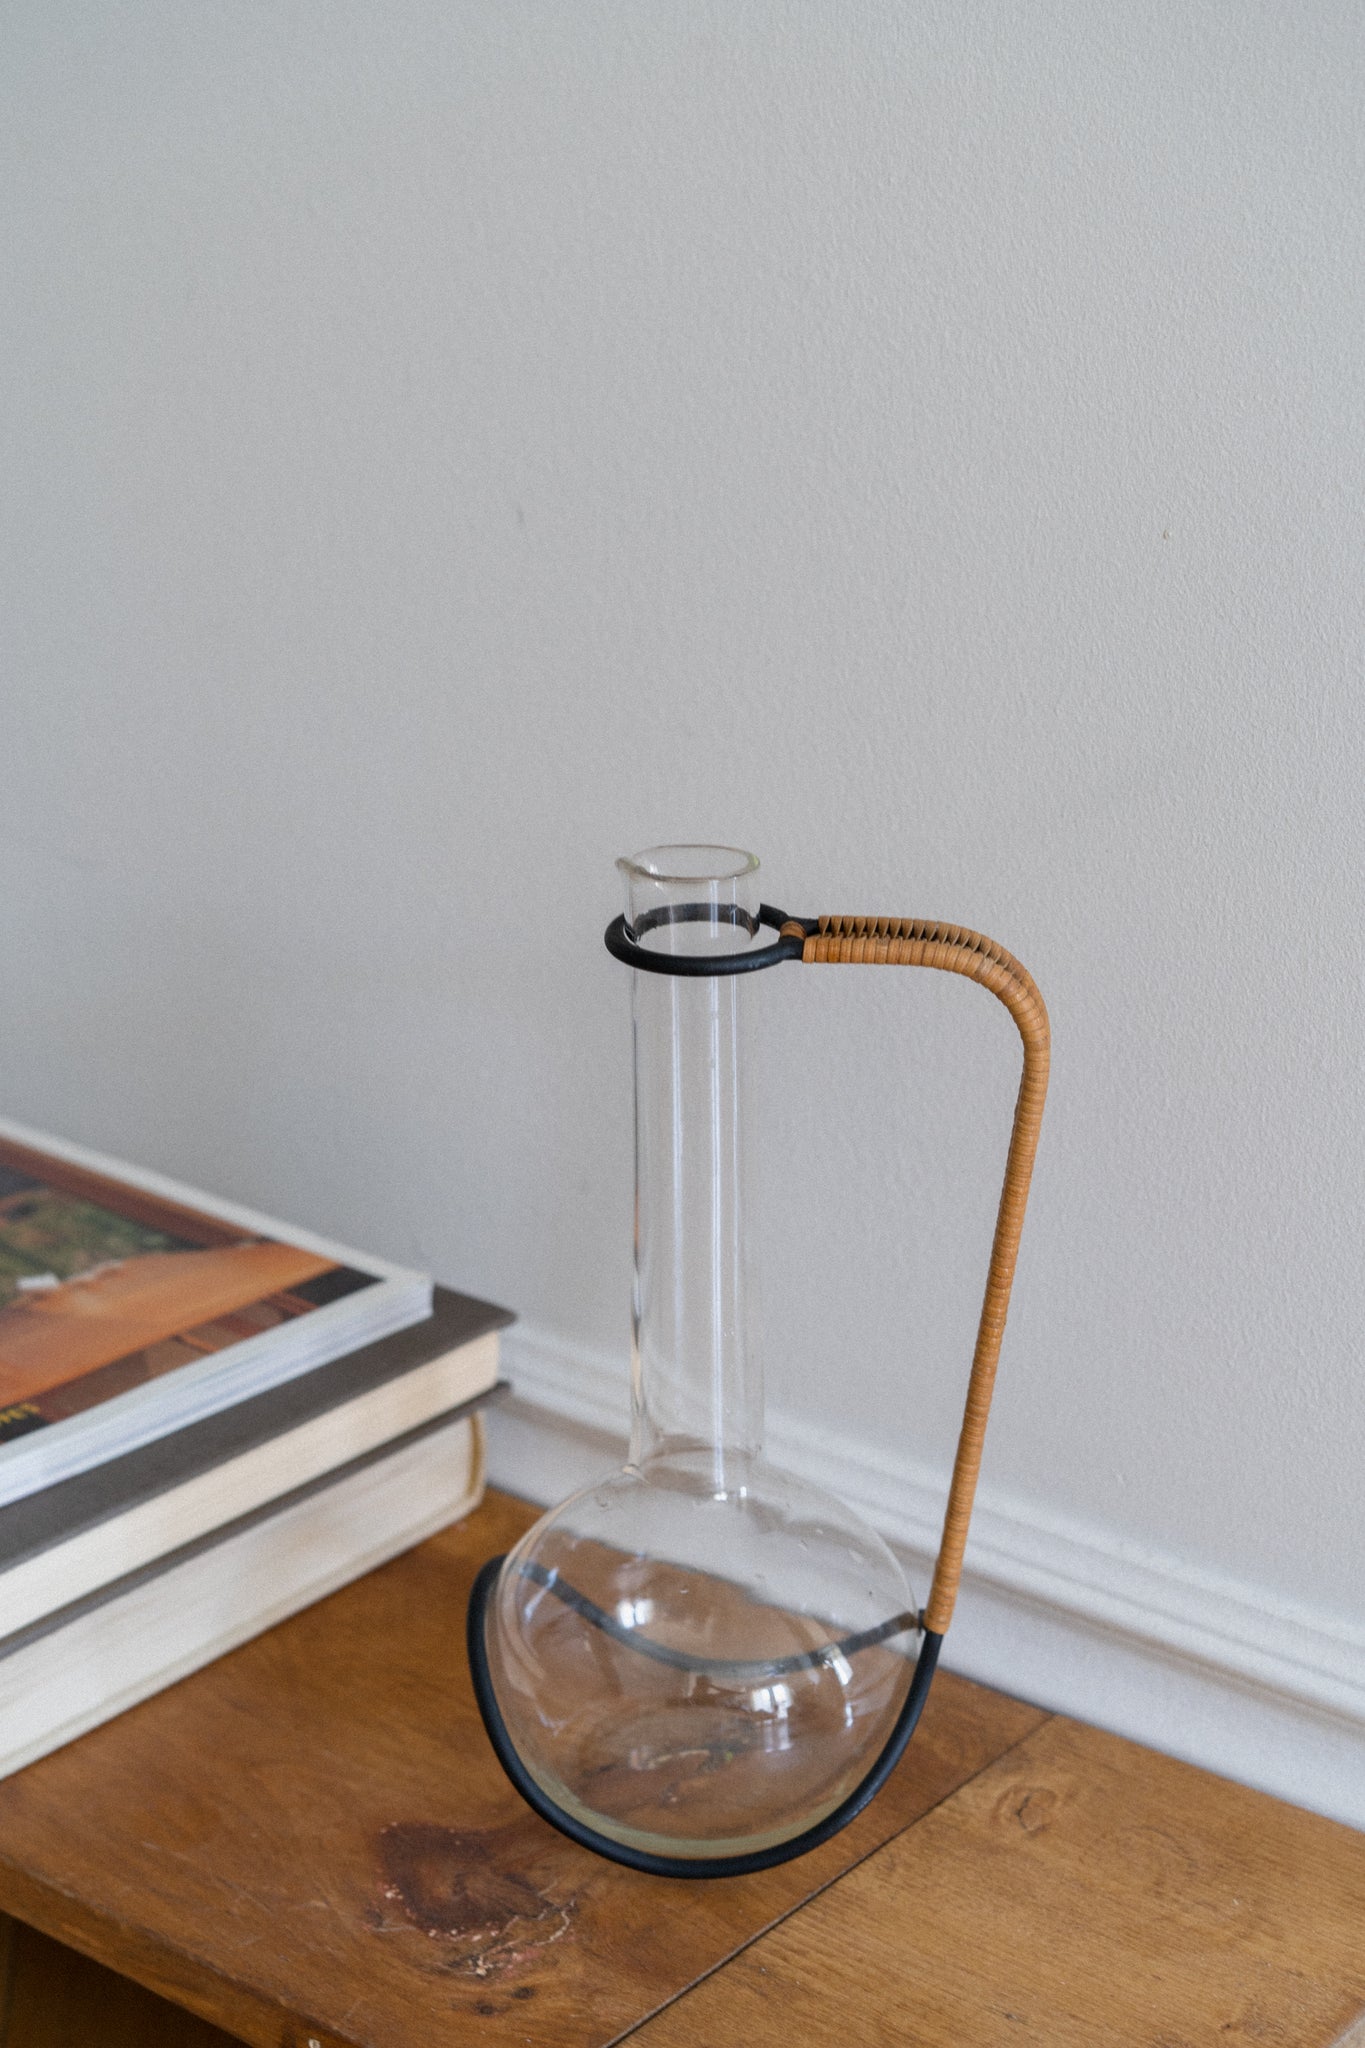 Bulb Stem Vase